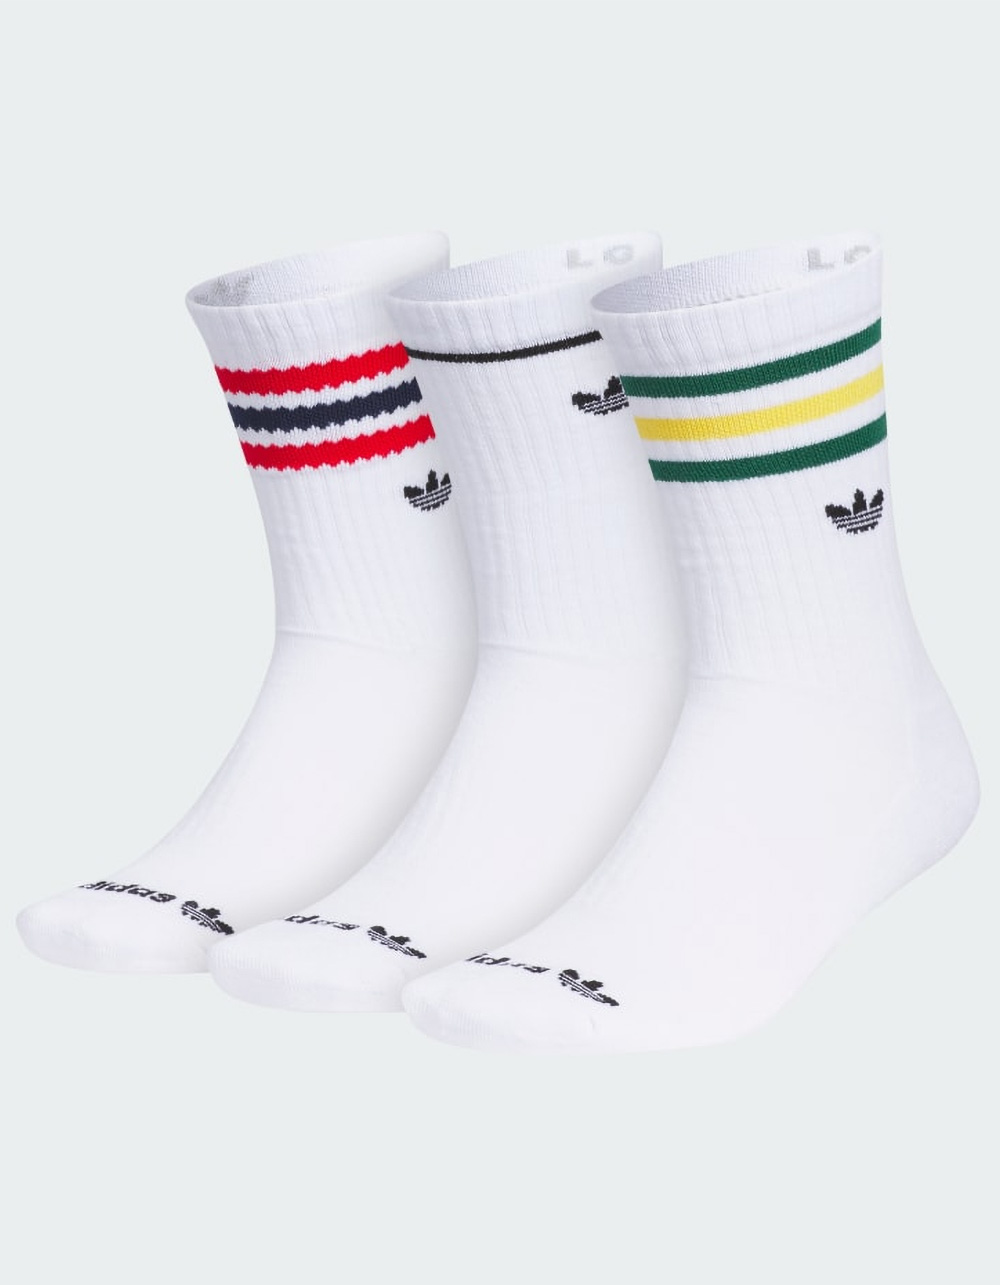 ADIDAS Originals Roller 3.0 3 Pack Mens Crew Socks - WHITE COMBO